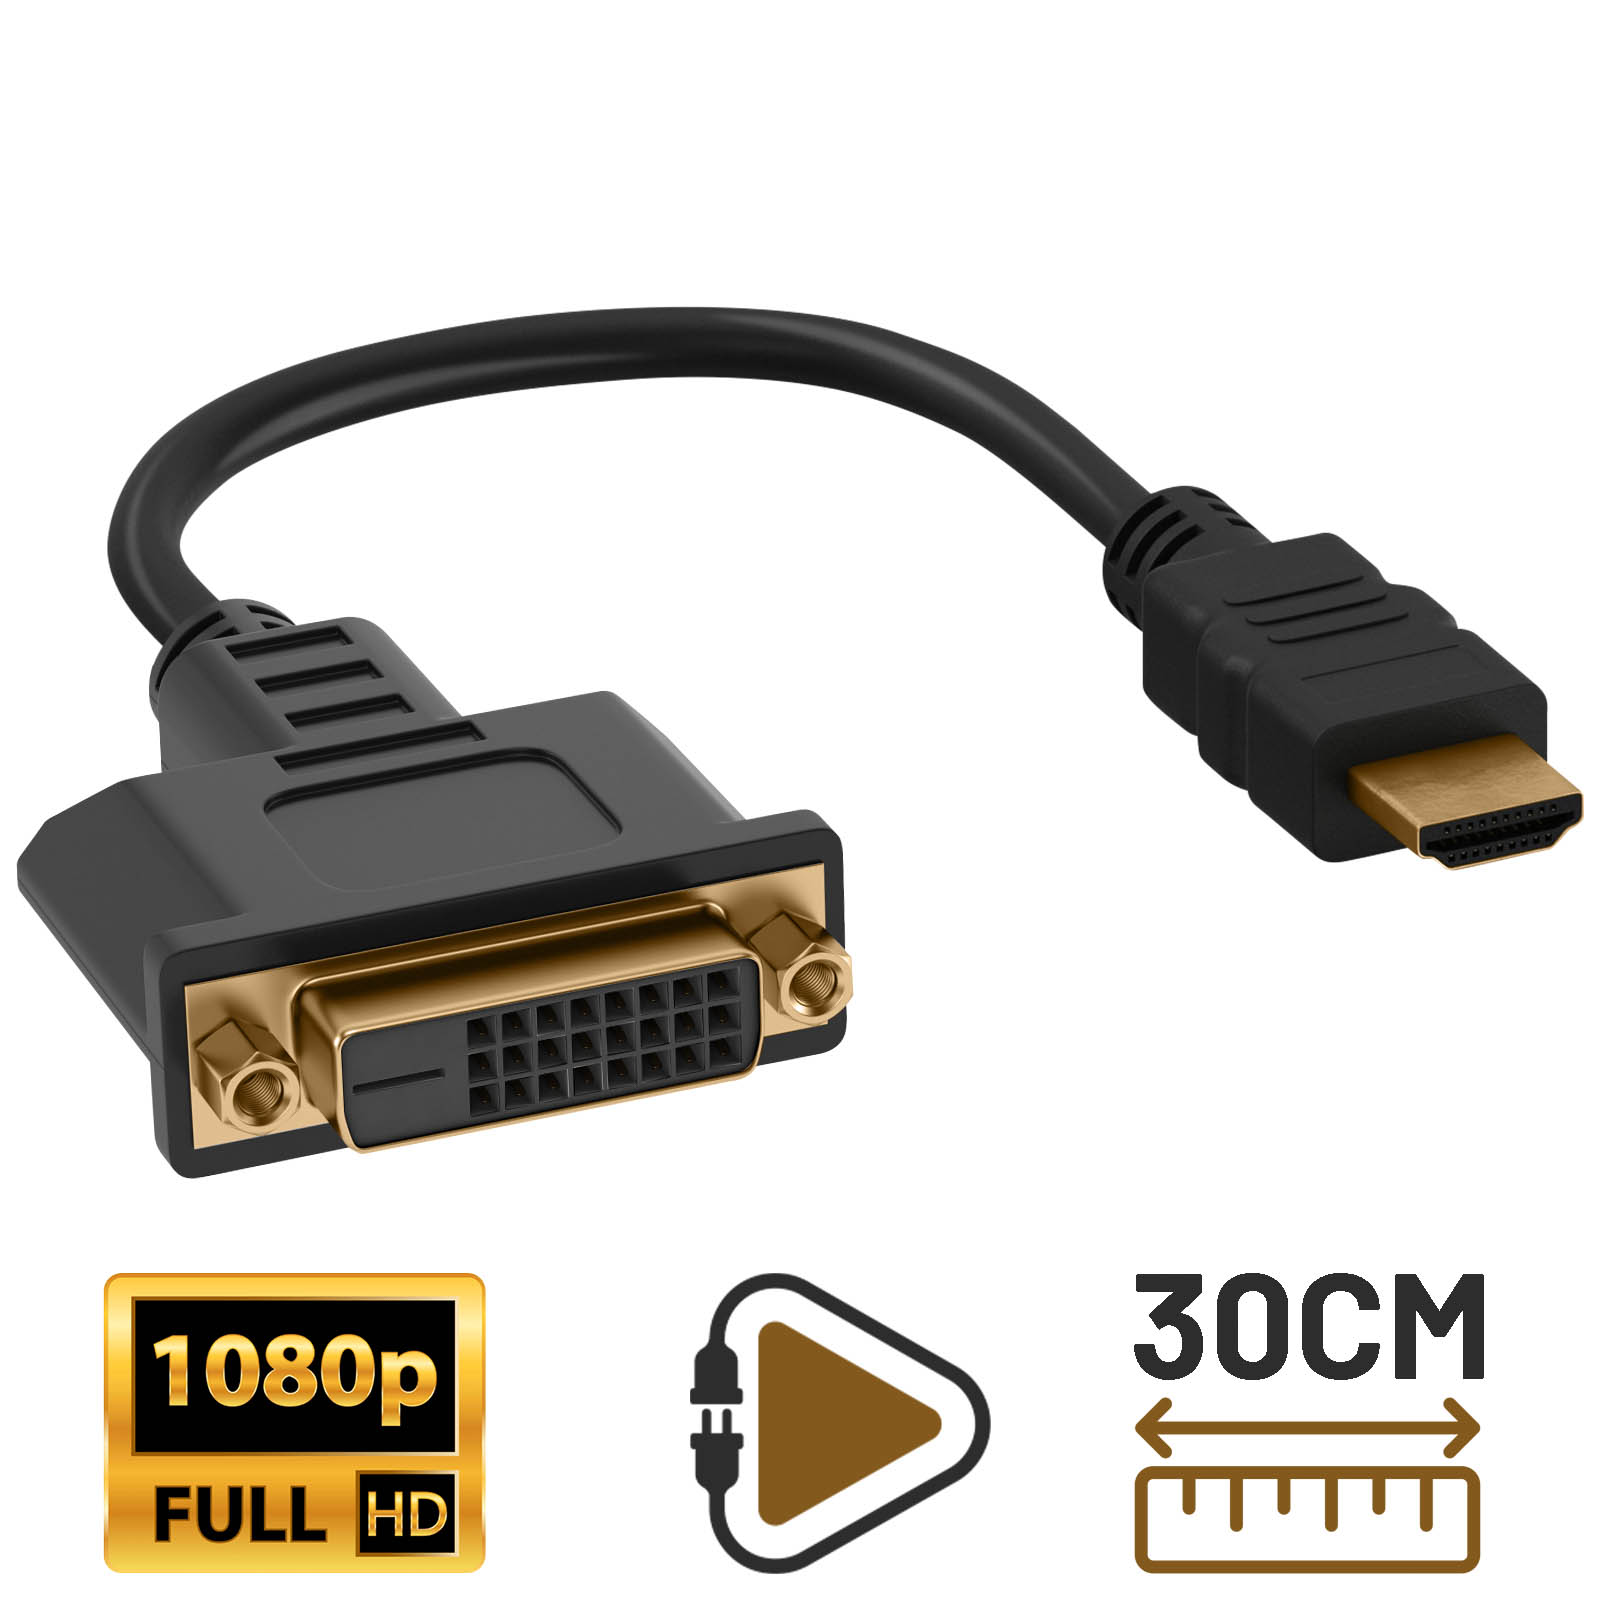 Câble Vidéo HDMI mâle vers DVI 24 + 1 mâle, Full HD 1080p - Noir